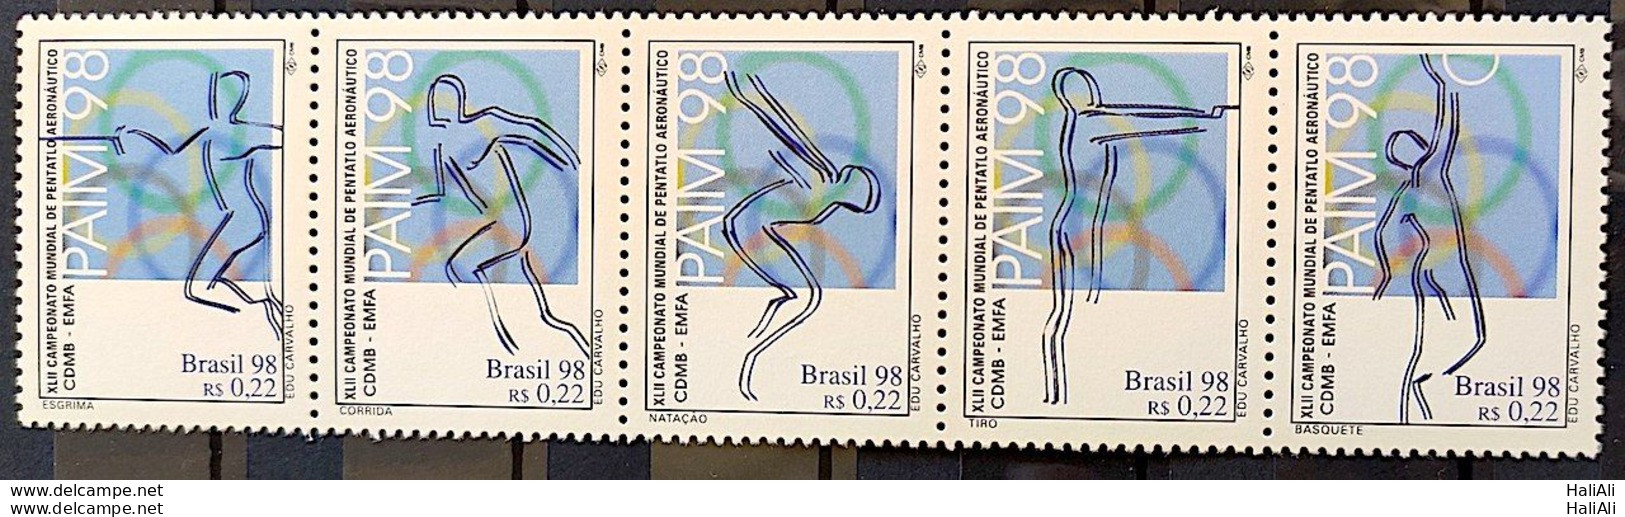 C 2153 Brazil Stamp Seal Aeronautical Pentathlon Fencing Swimming Shooting Racing Basketball Military Sport 1998 - Unused Stamps